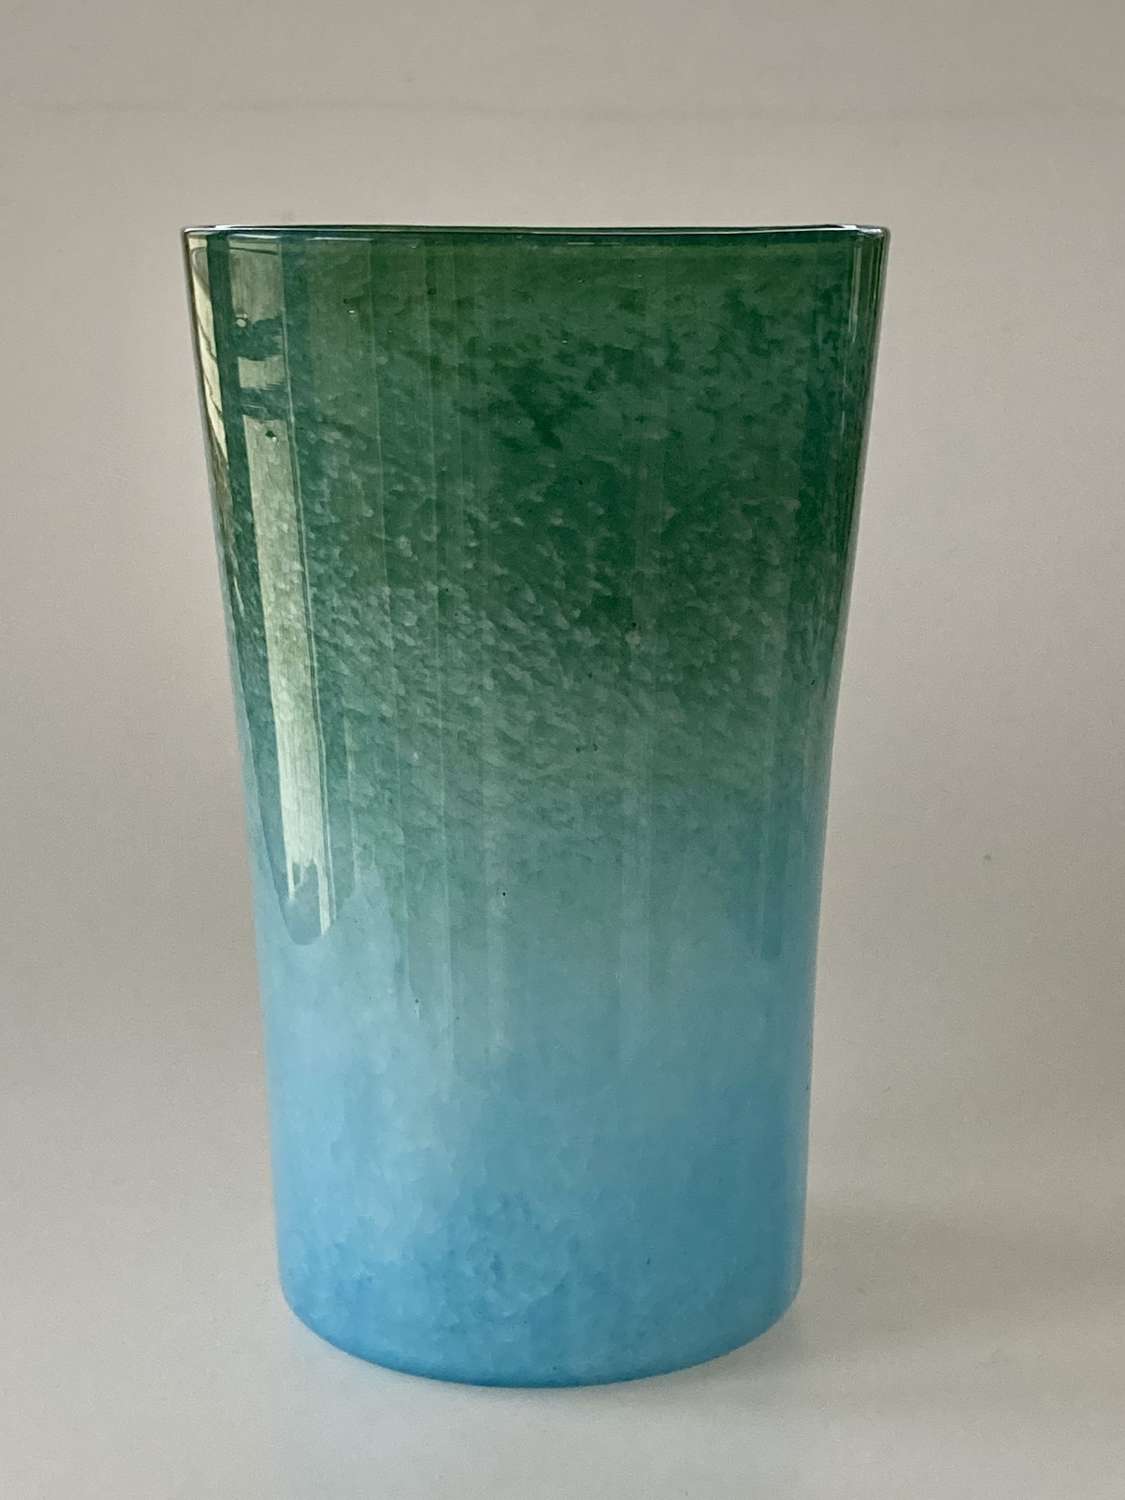 Large cloudy green/blue tumbler vase